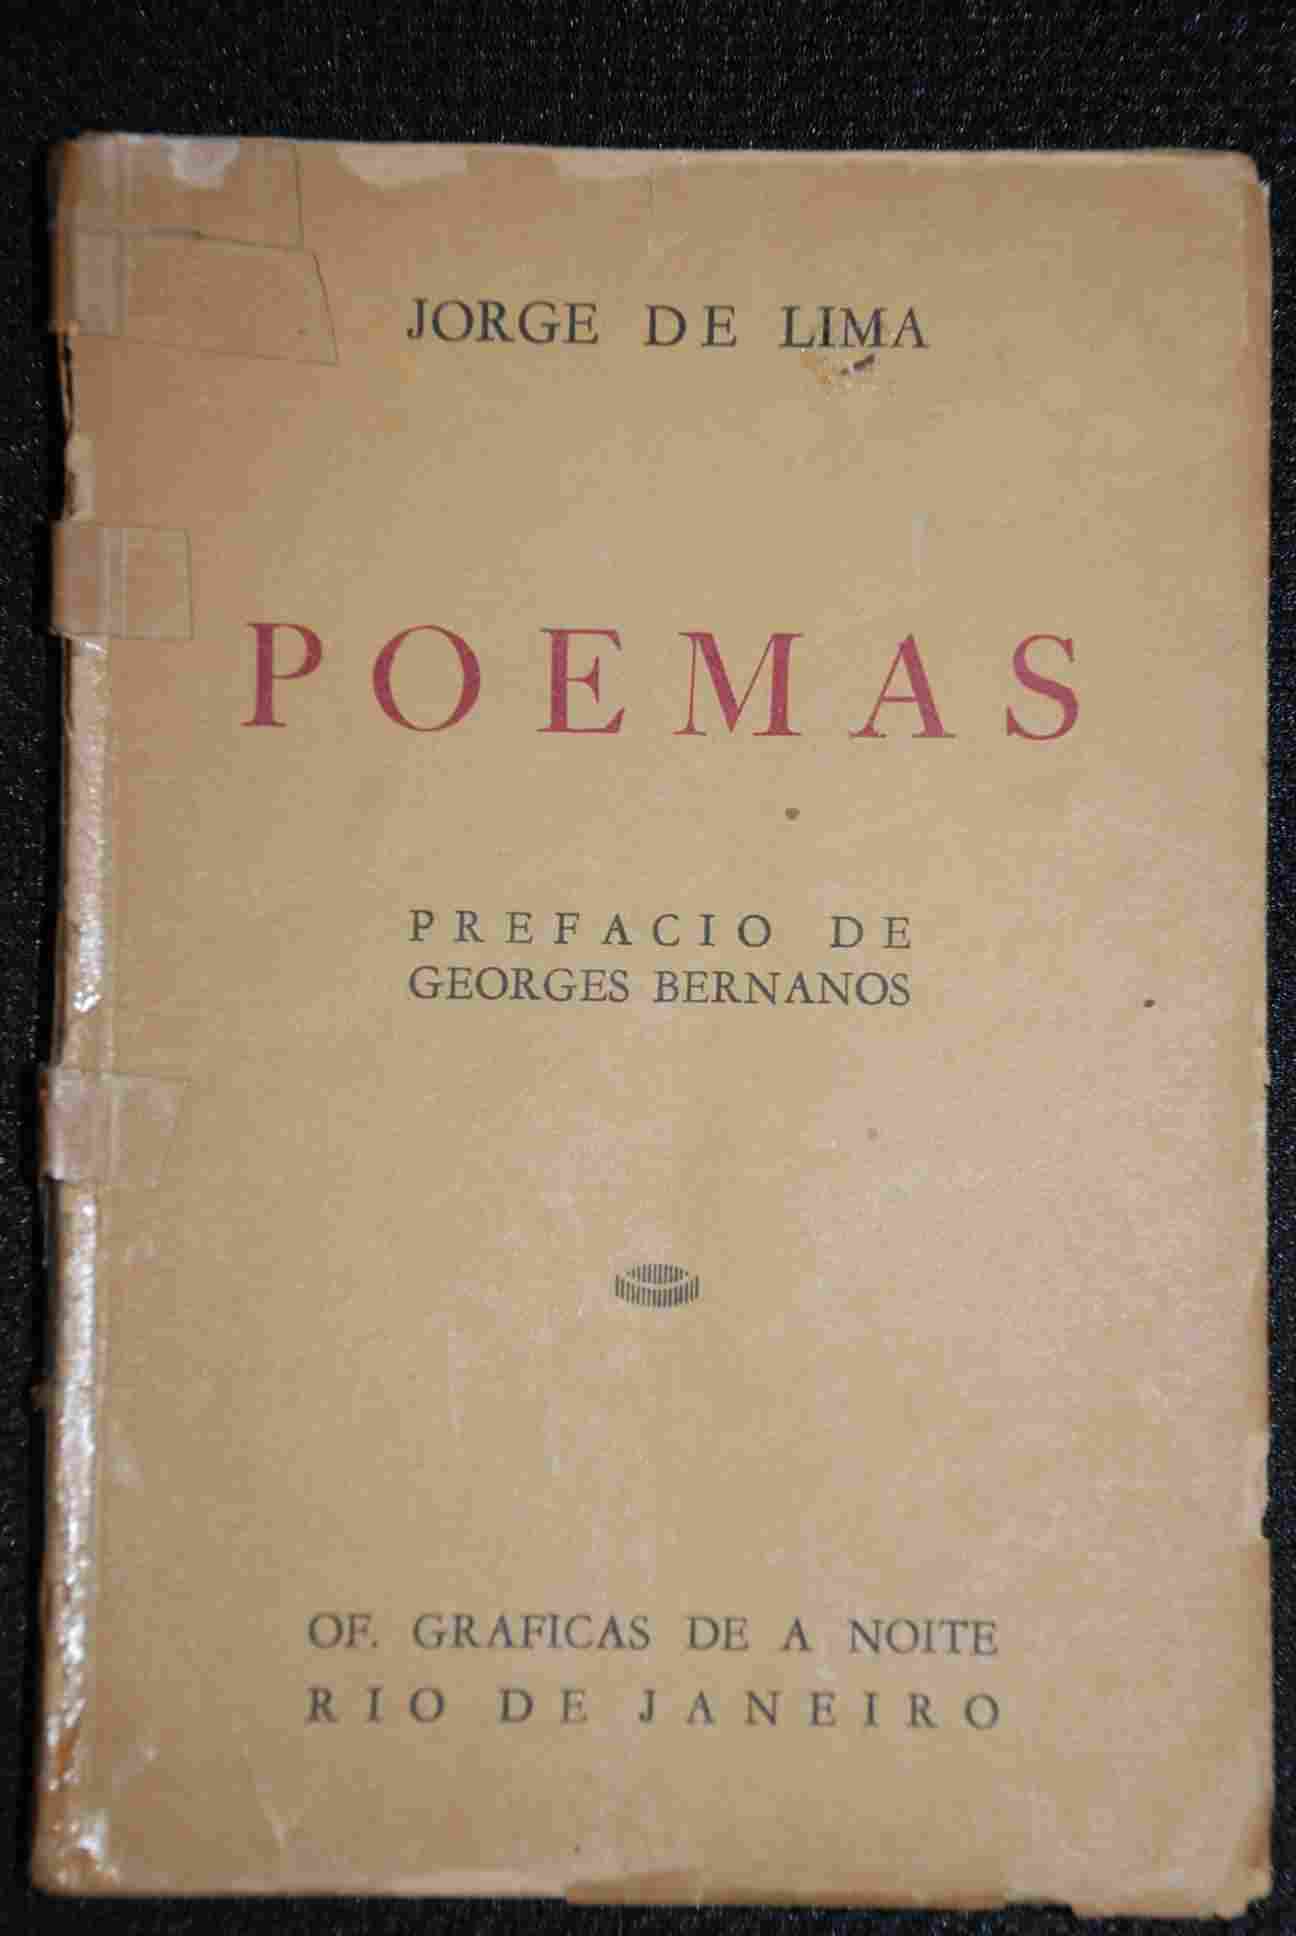 Jorge de Lima -  Poemas prefacio de Georges Bernanos